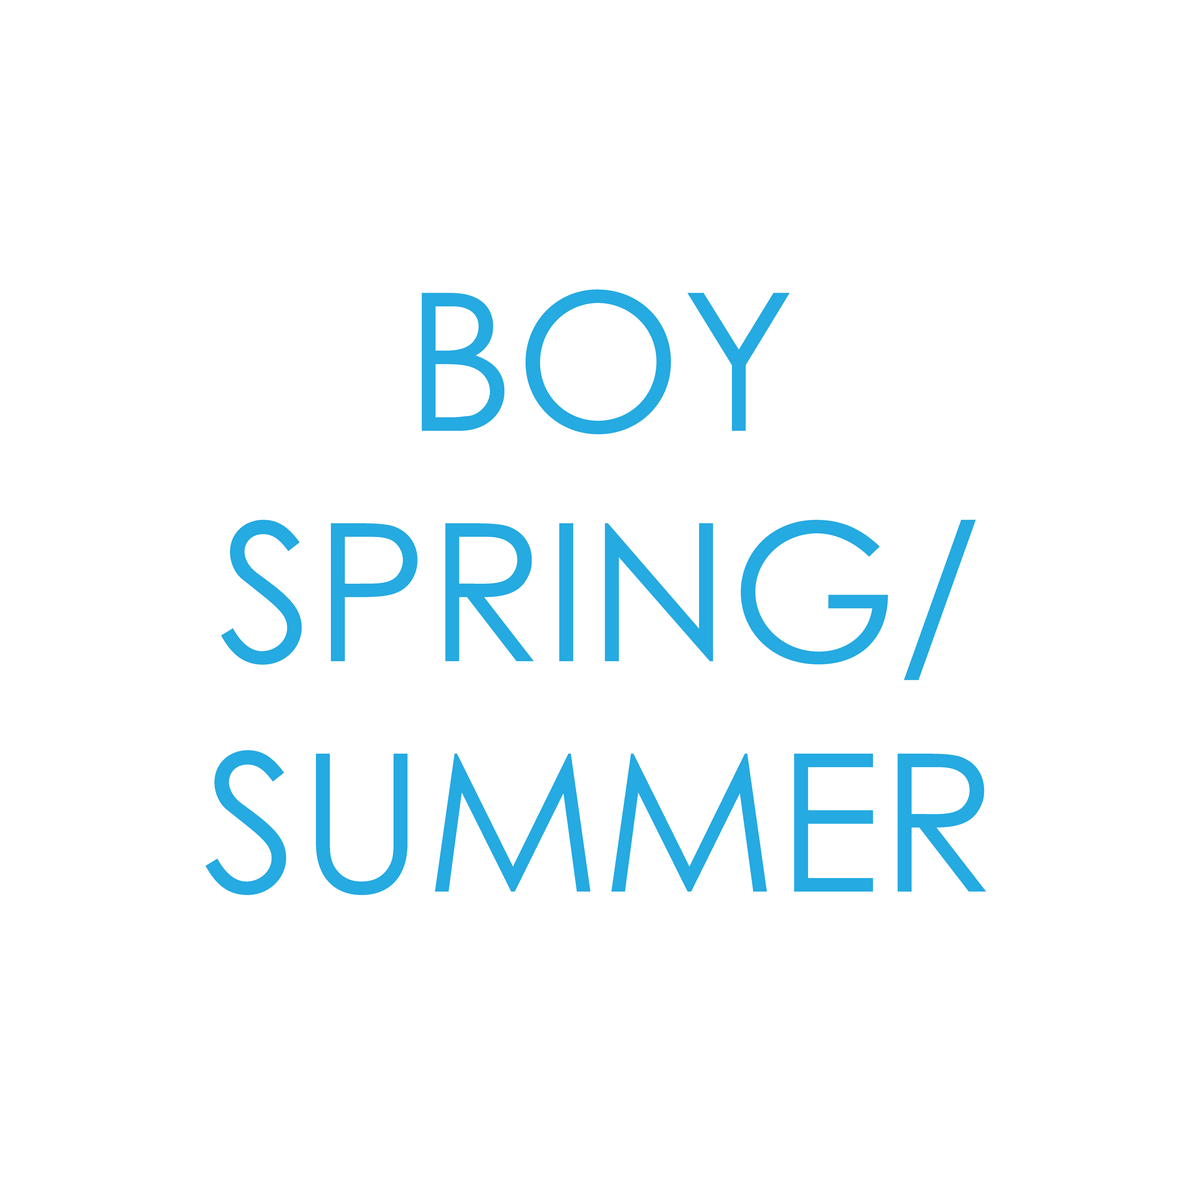 BOY SPRING/SUMMER